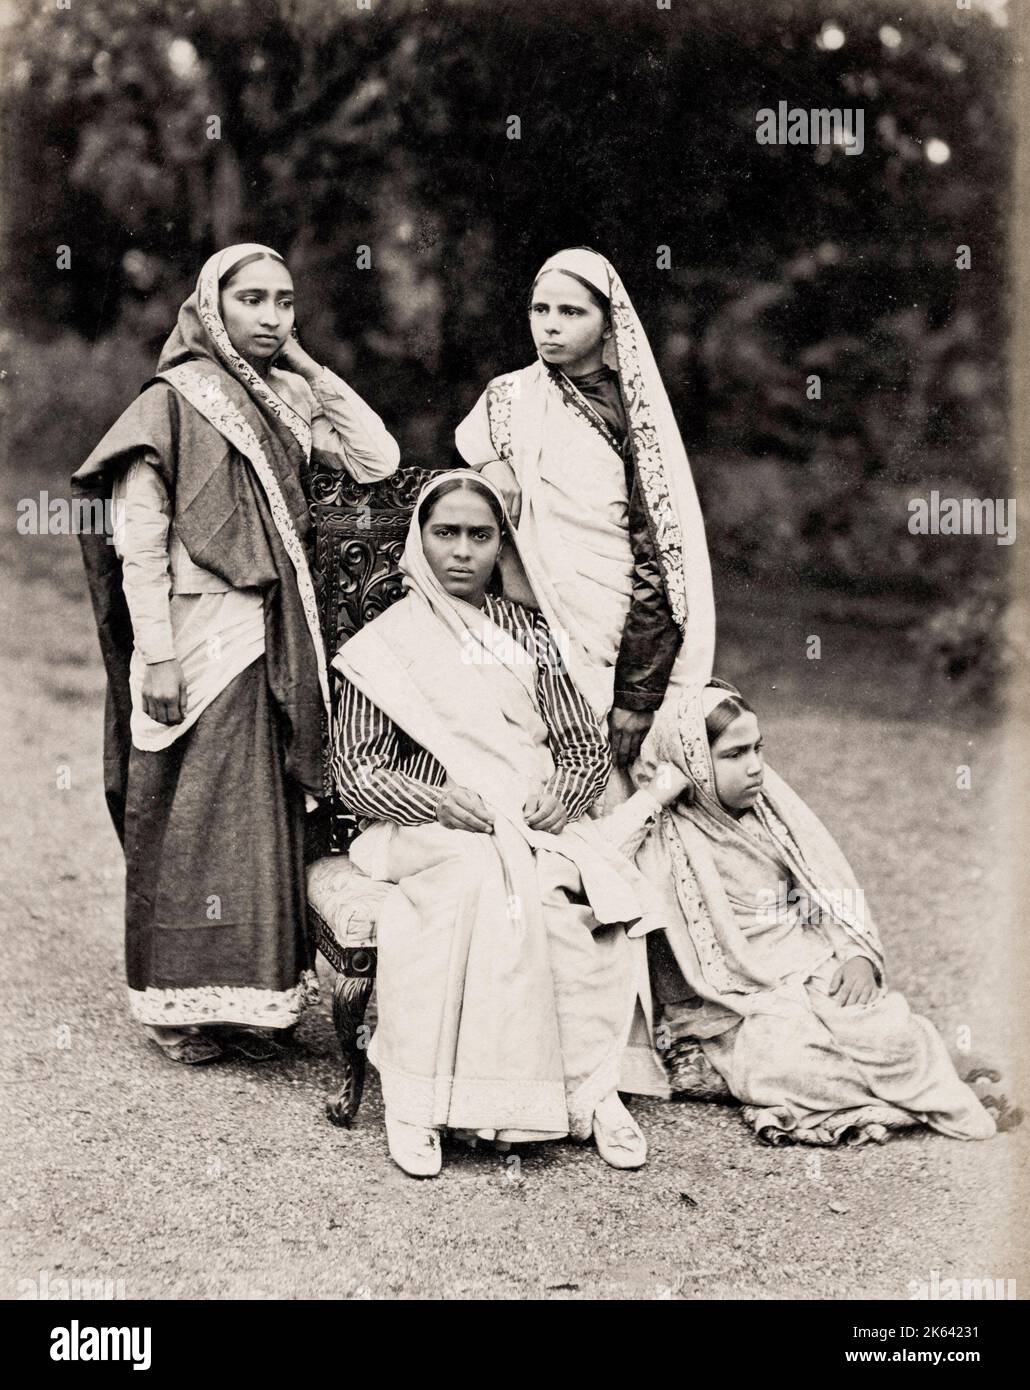 Group of women, India, Taurines studio. Vintage 19th century photograph. Stock Photo